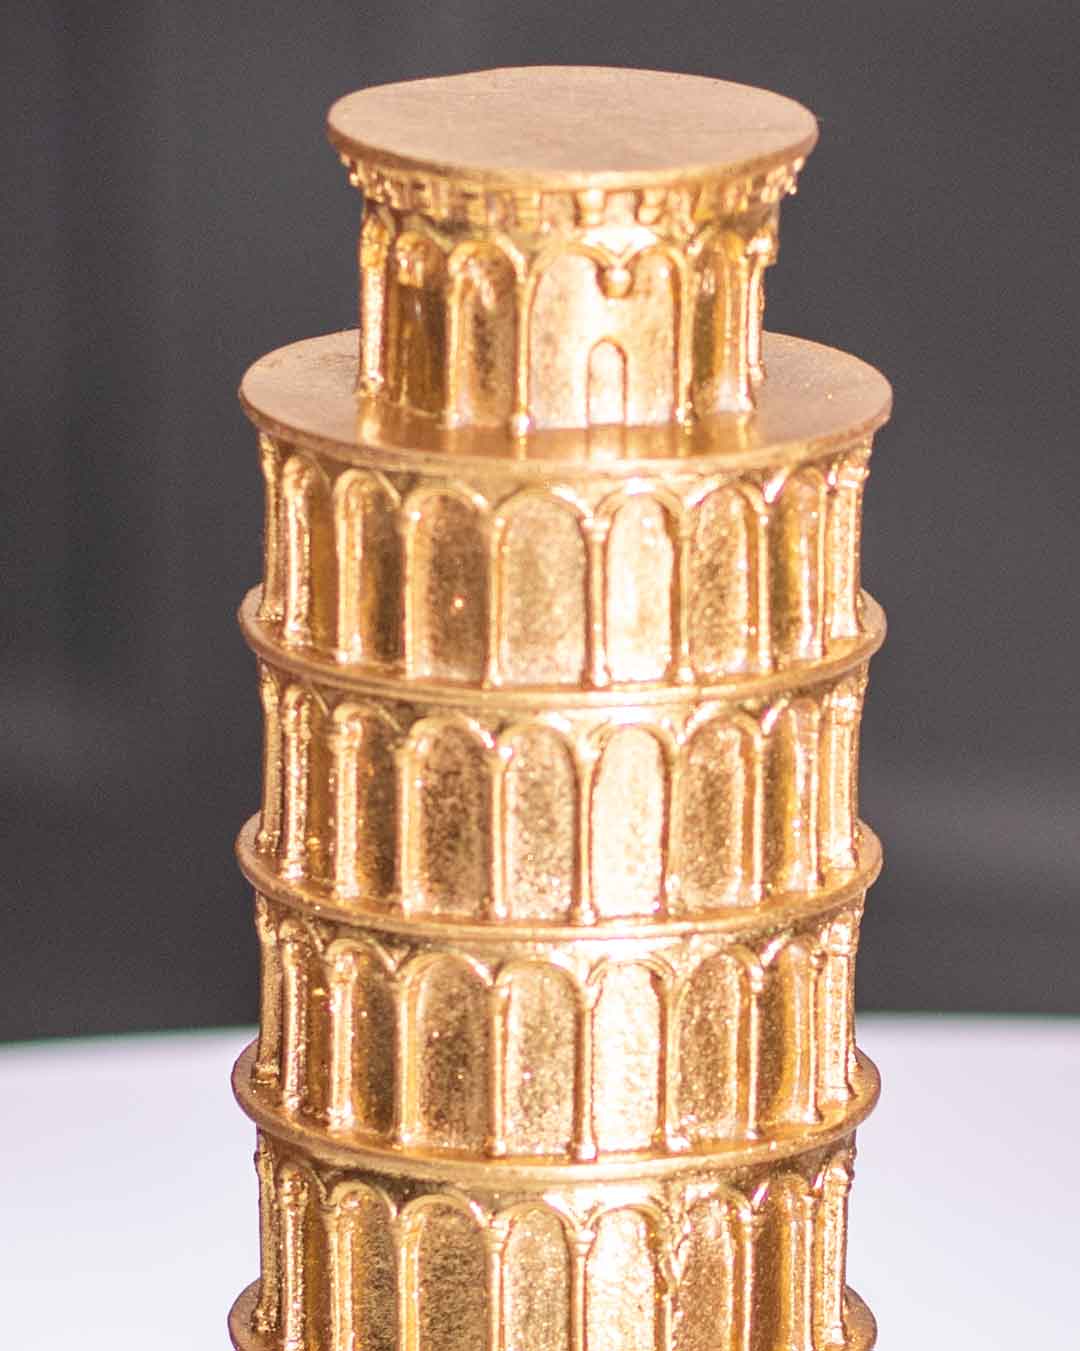 Vintage Leaning Tower of Pisa Sculpture